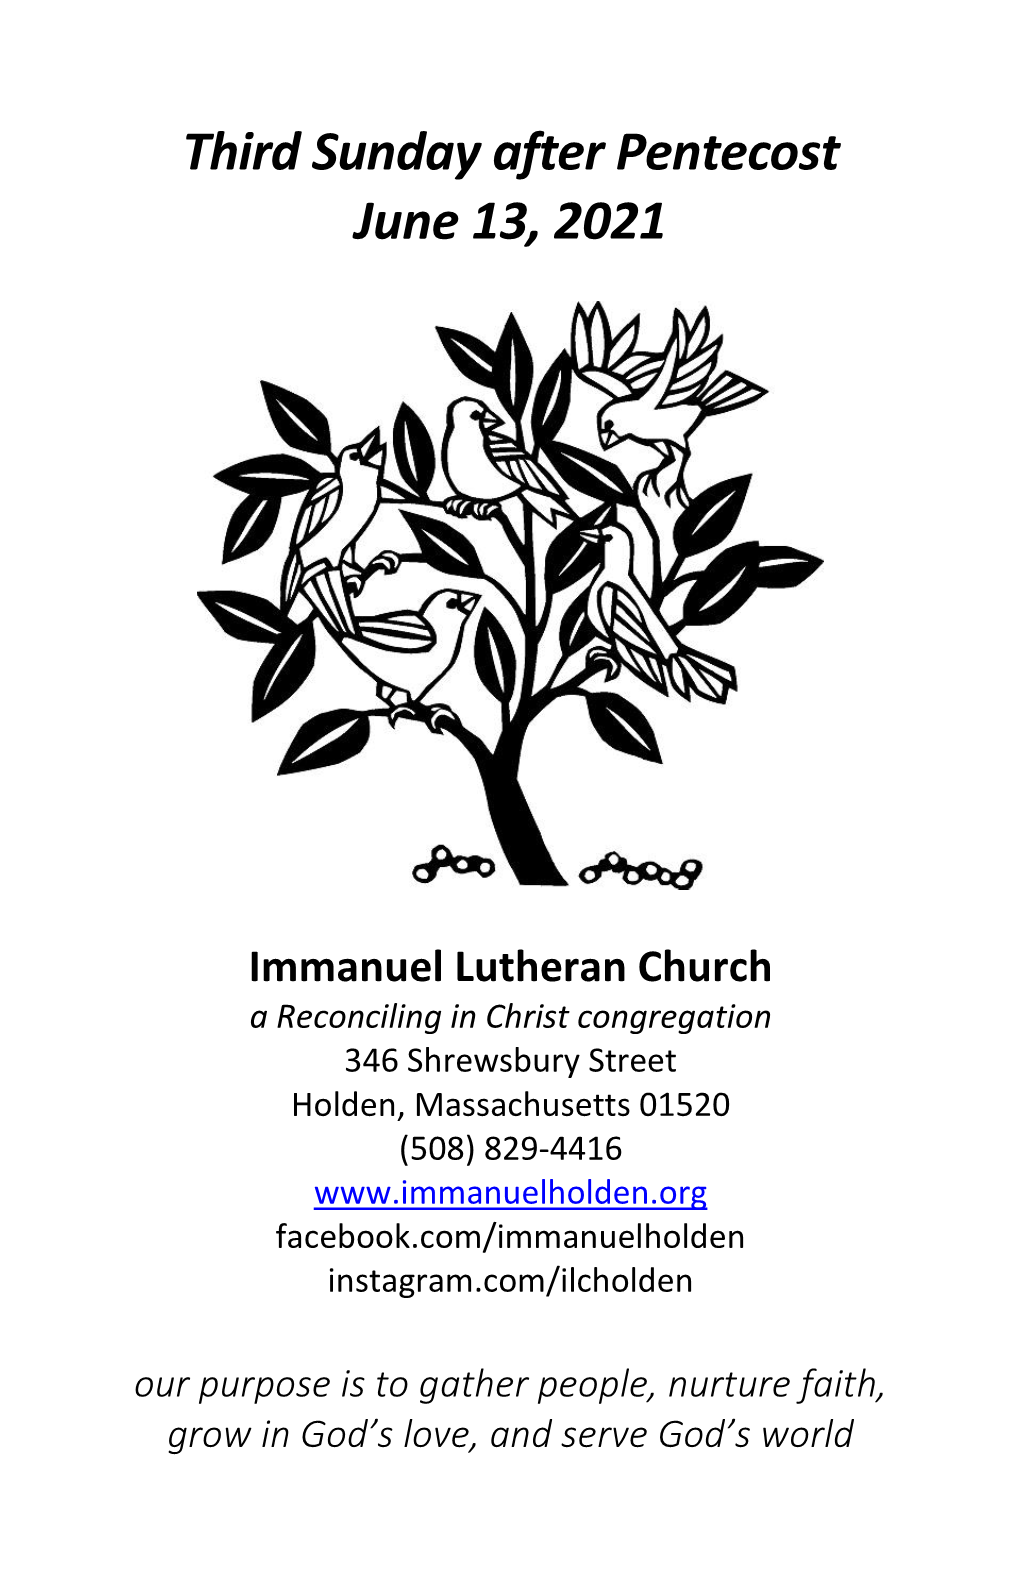 Third Sunday After Pentecost June 13, 2021 Immanuel Lutheran